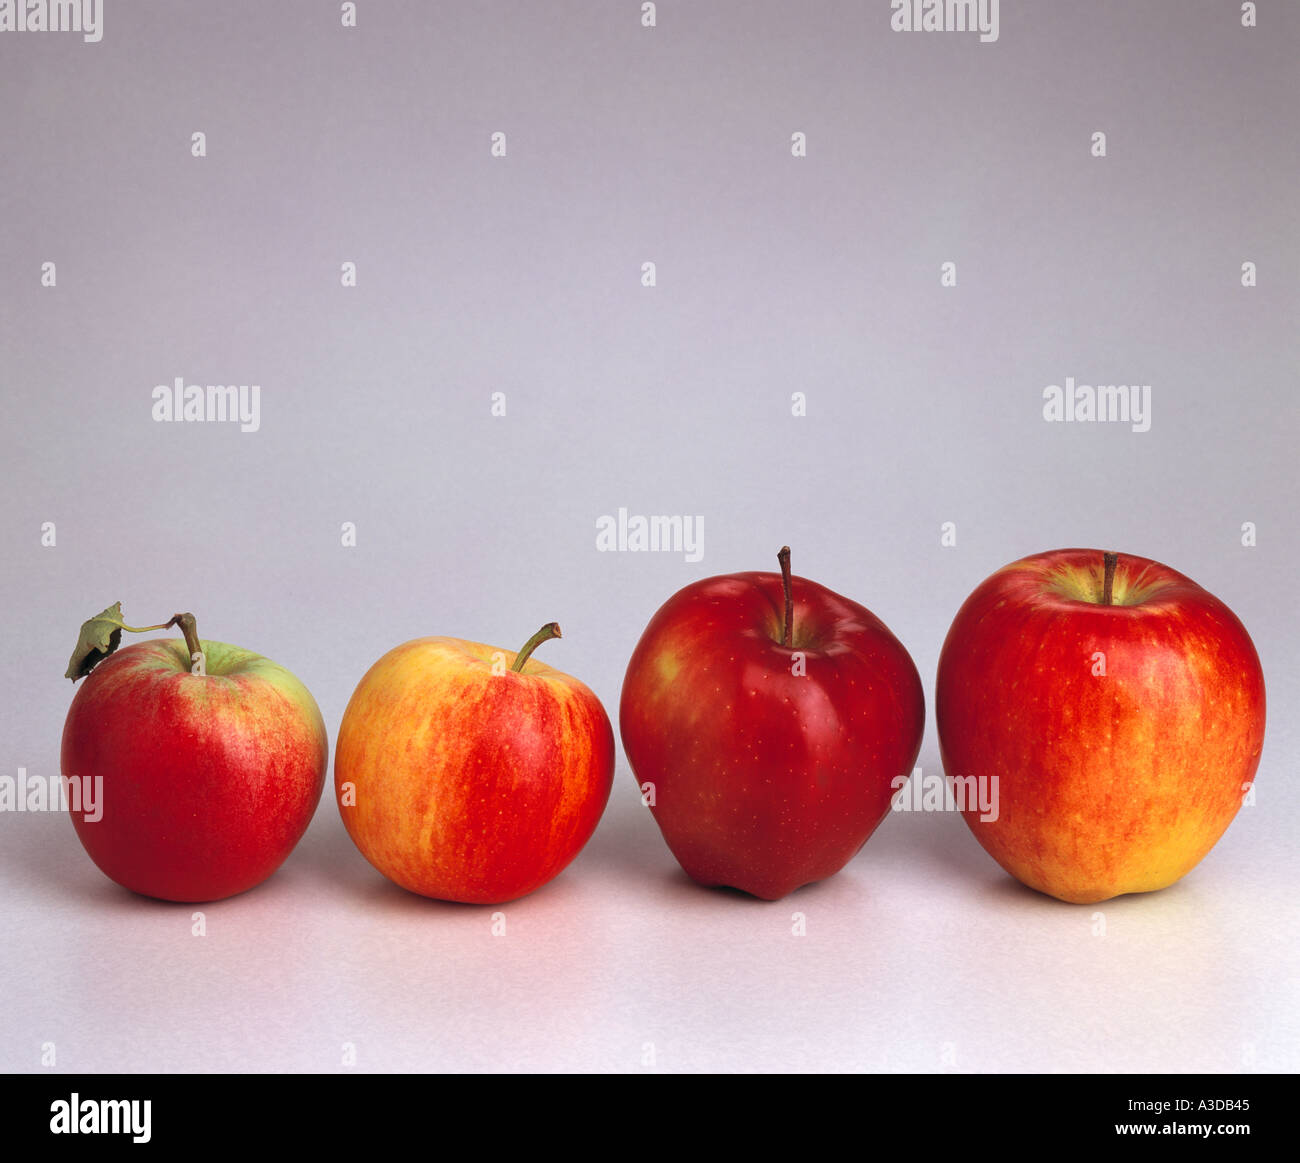 https://c8.alamy.com/comp/A3DB45/varieties-of-apples-katy-royal-gala-red-delicious-braeburn-A3DB45.jpg